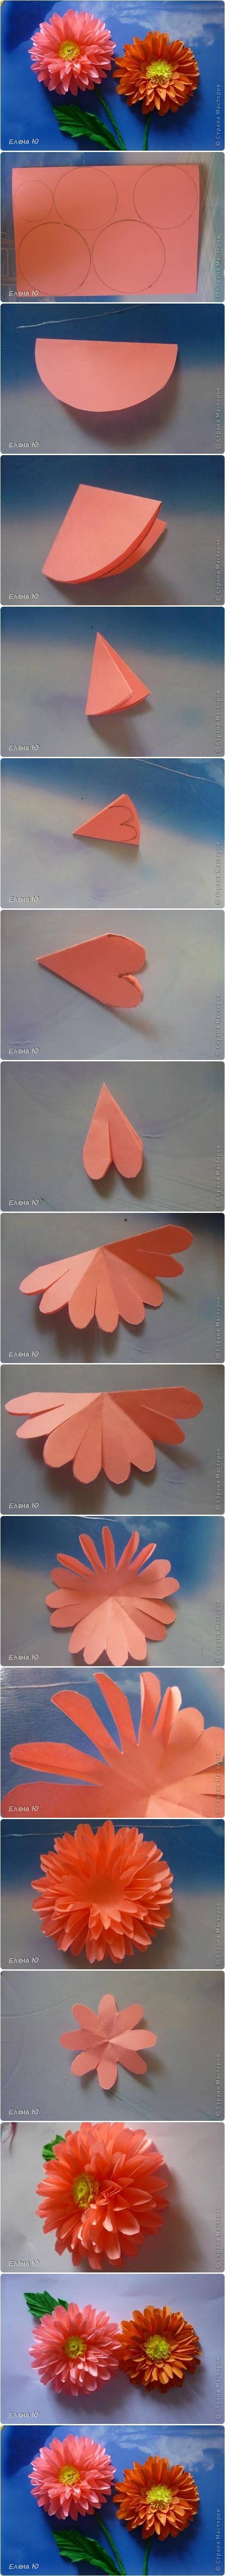 Свадьба - How To Make Paper Dahlias